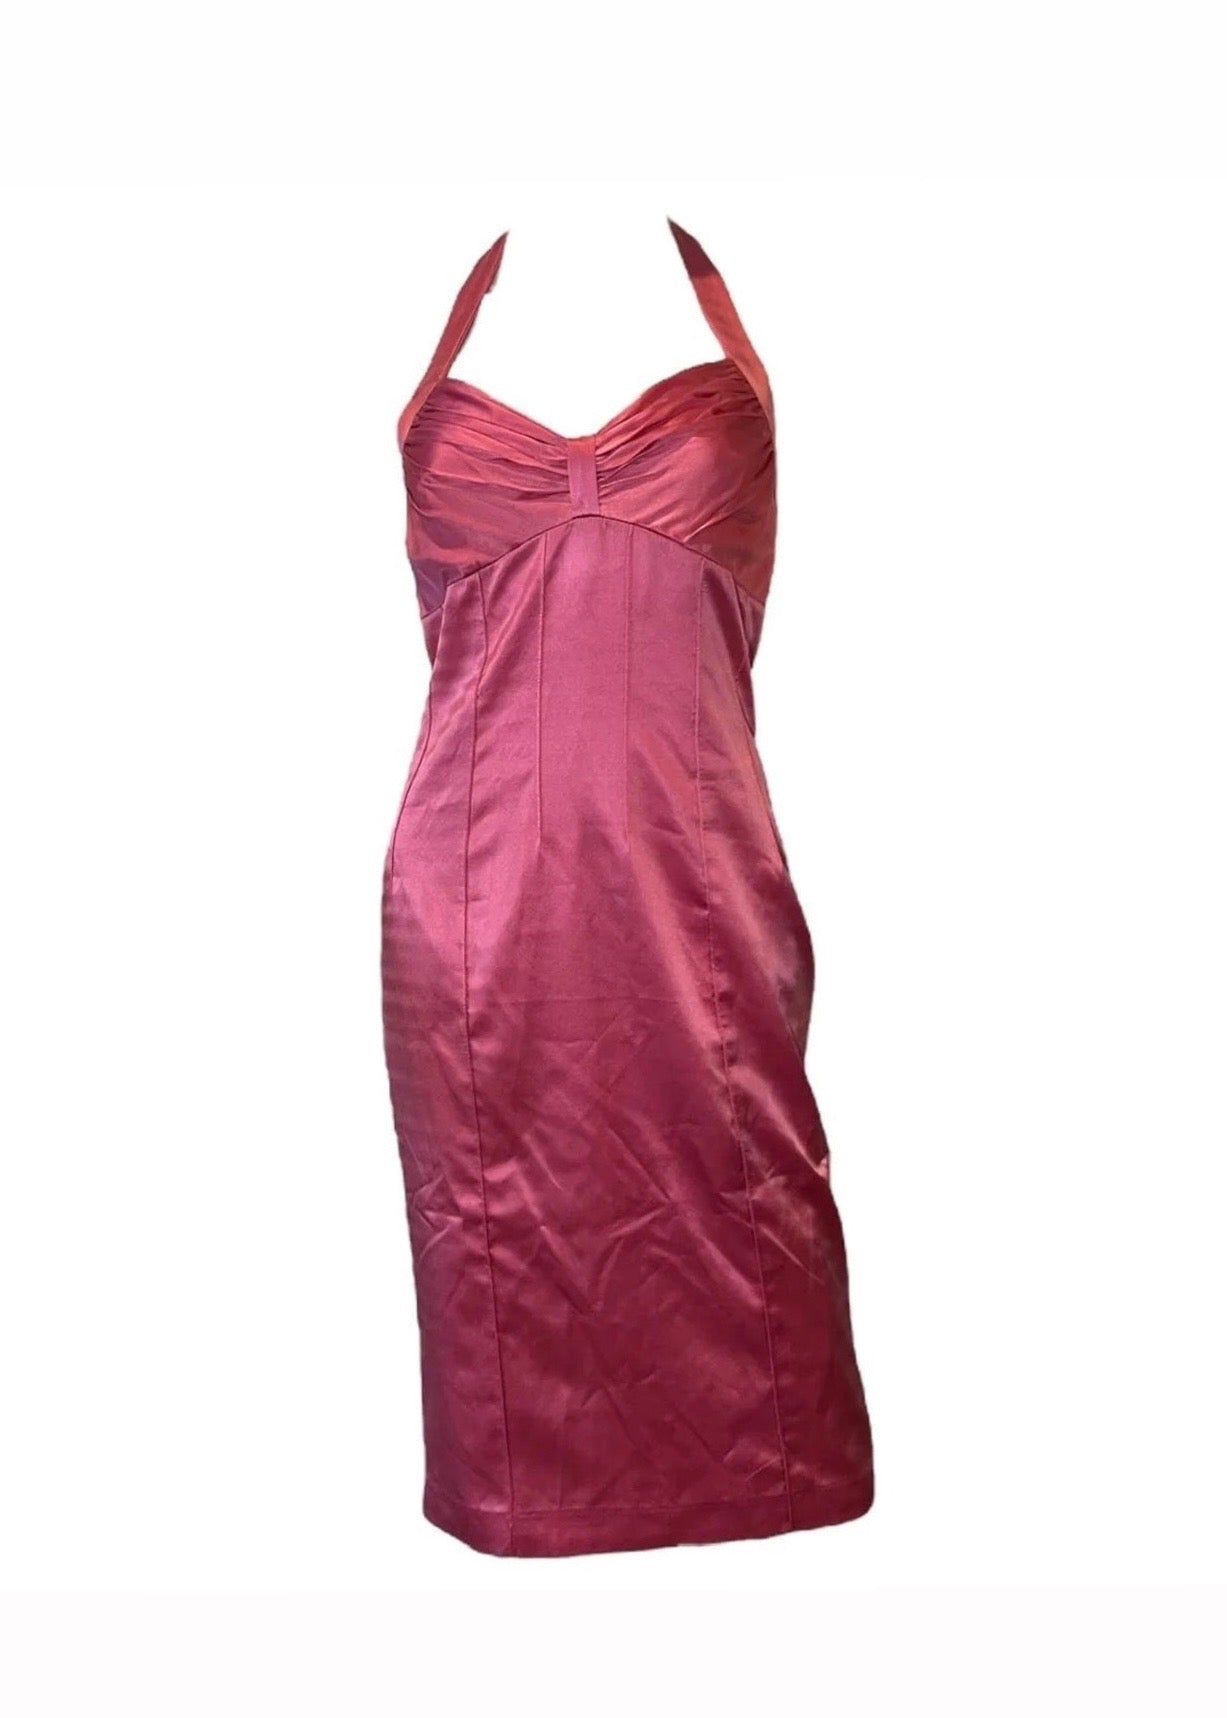 Betsey Johnson Pink 100% Silk Halter Dress